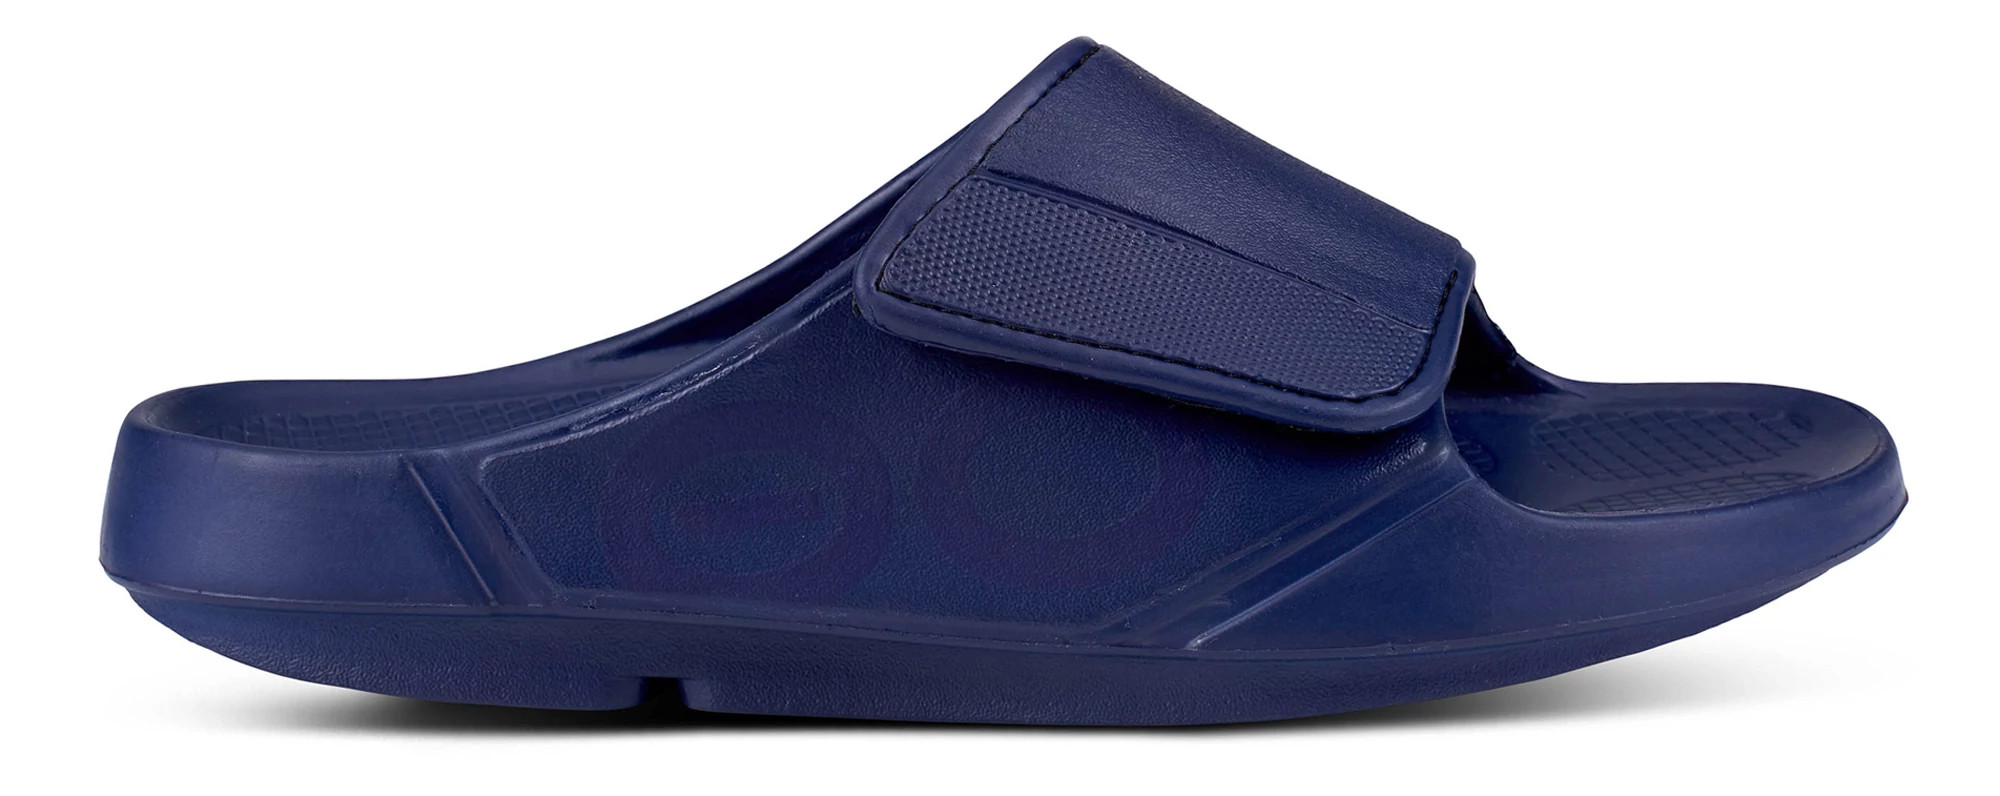 OOFOS OOahh Sport Flex Sandals Shoe - Matte Black